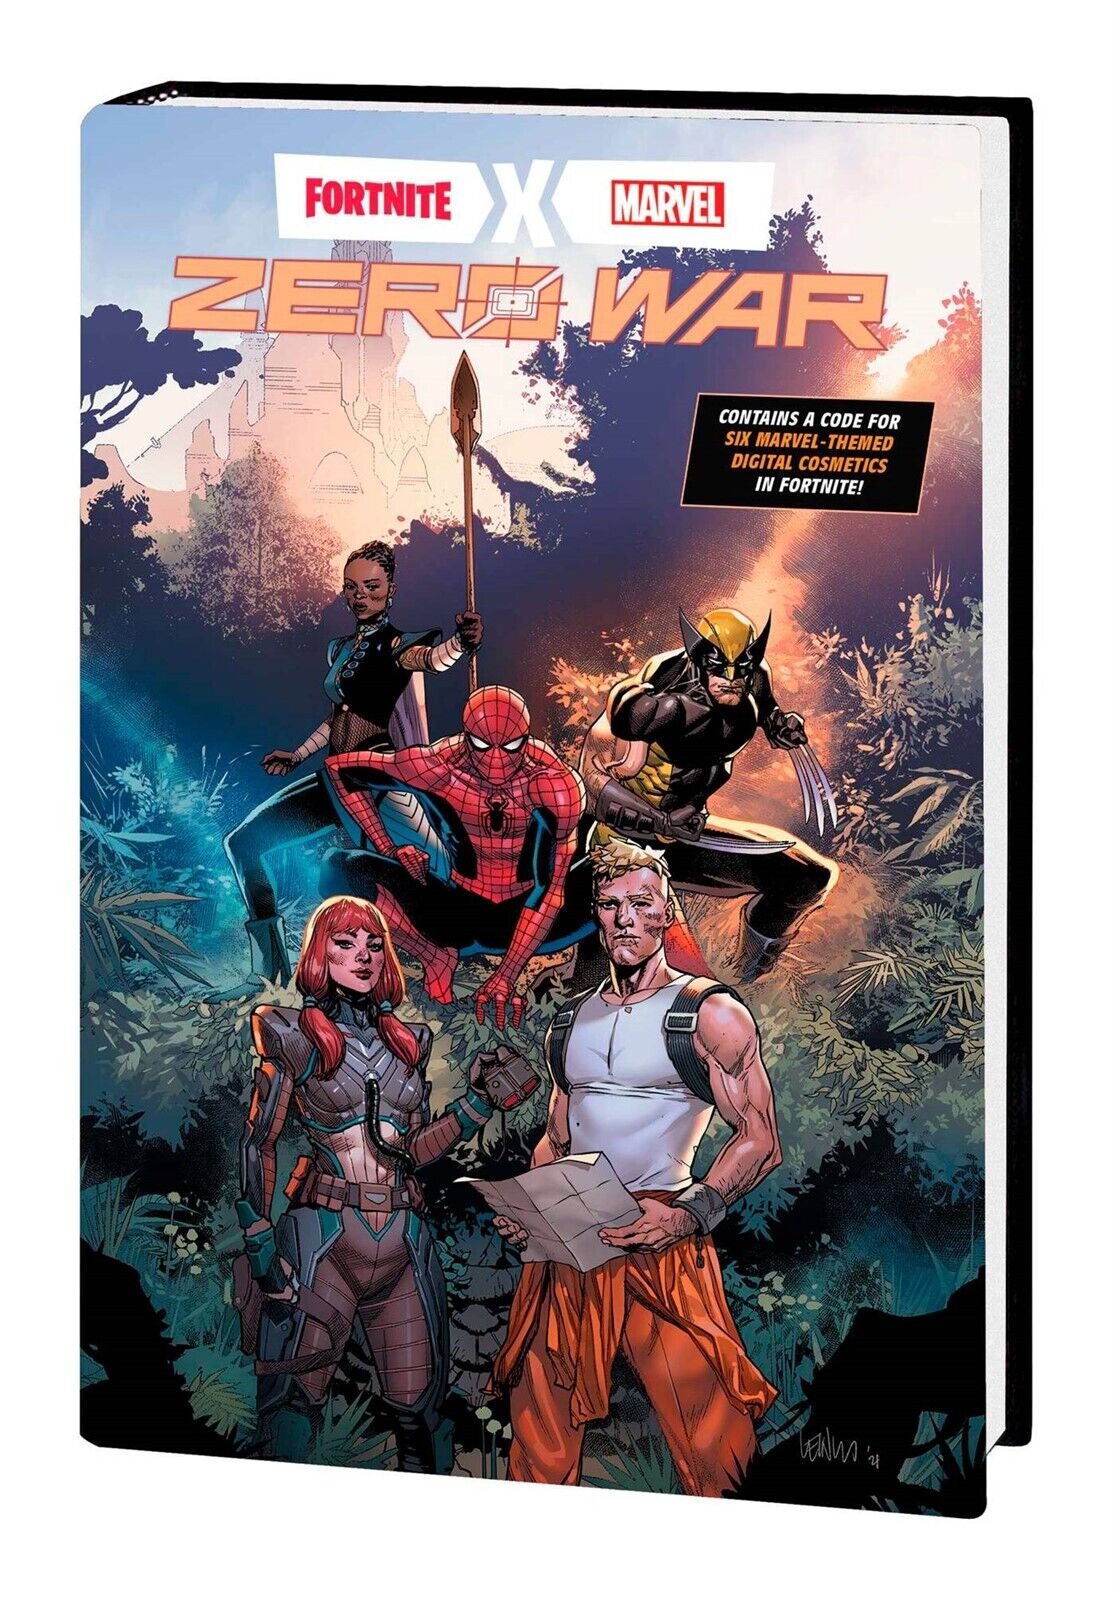 FORTNITE X MARVEL ZERO WAR PREMIERE HARDCOVER Marvel Comics HC Includes 6 Skins